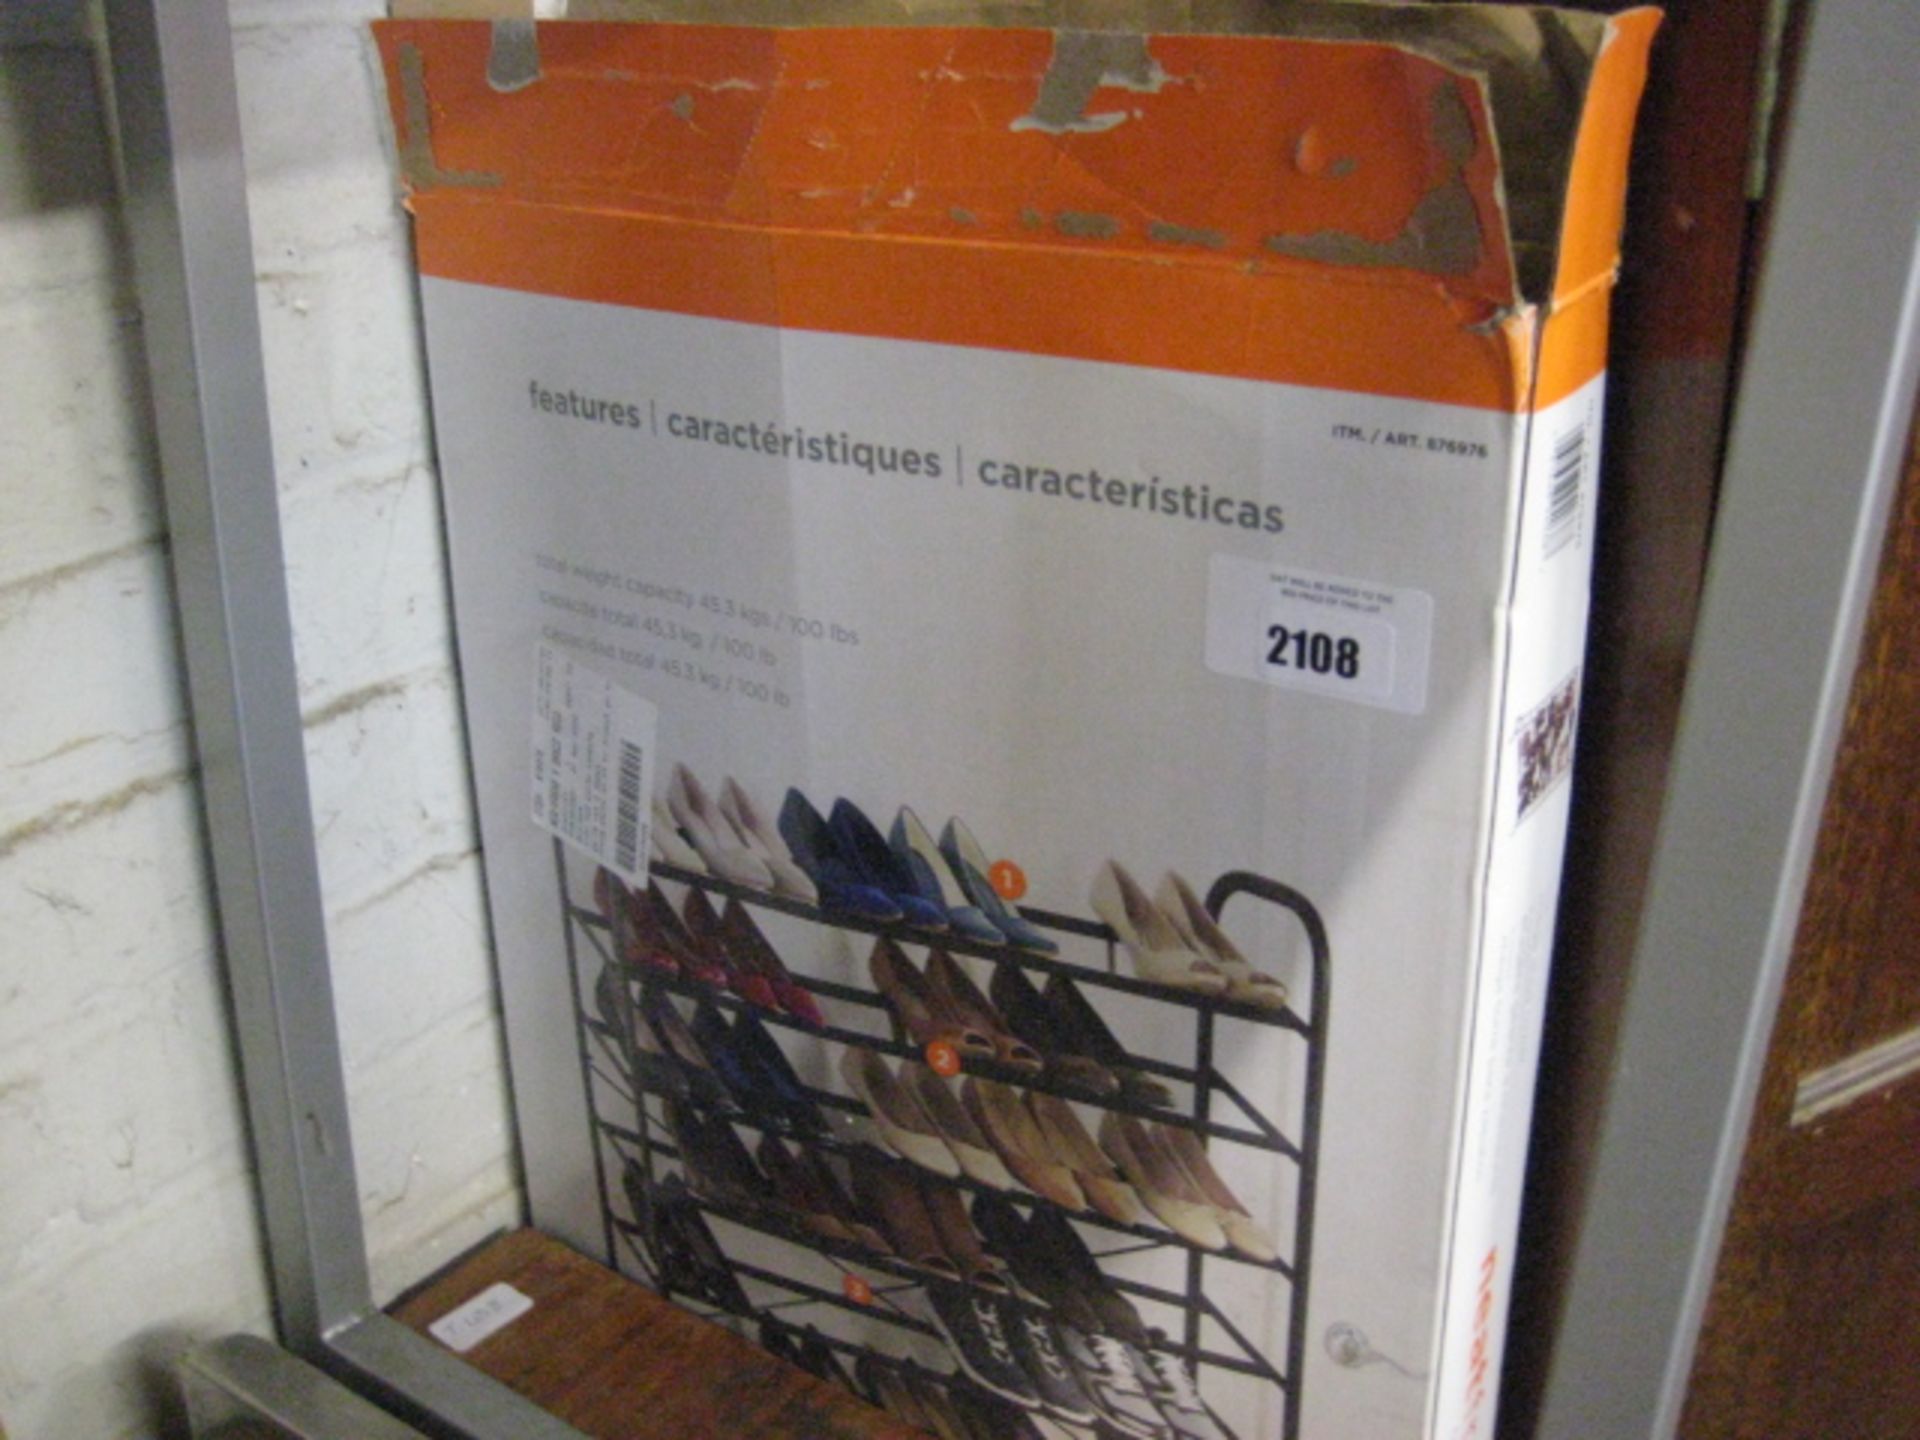 Boxed Neat Freak shoe rack